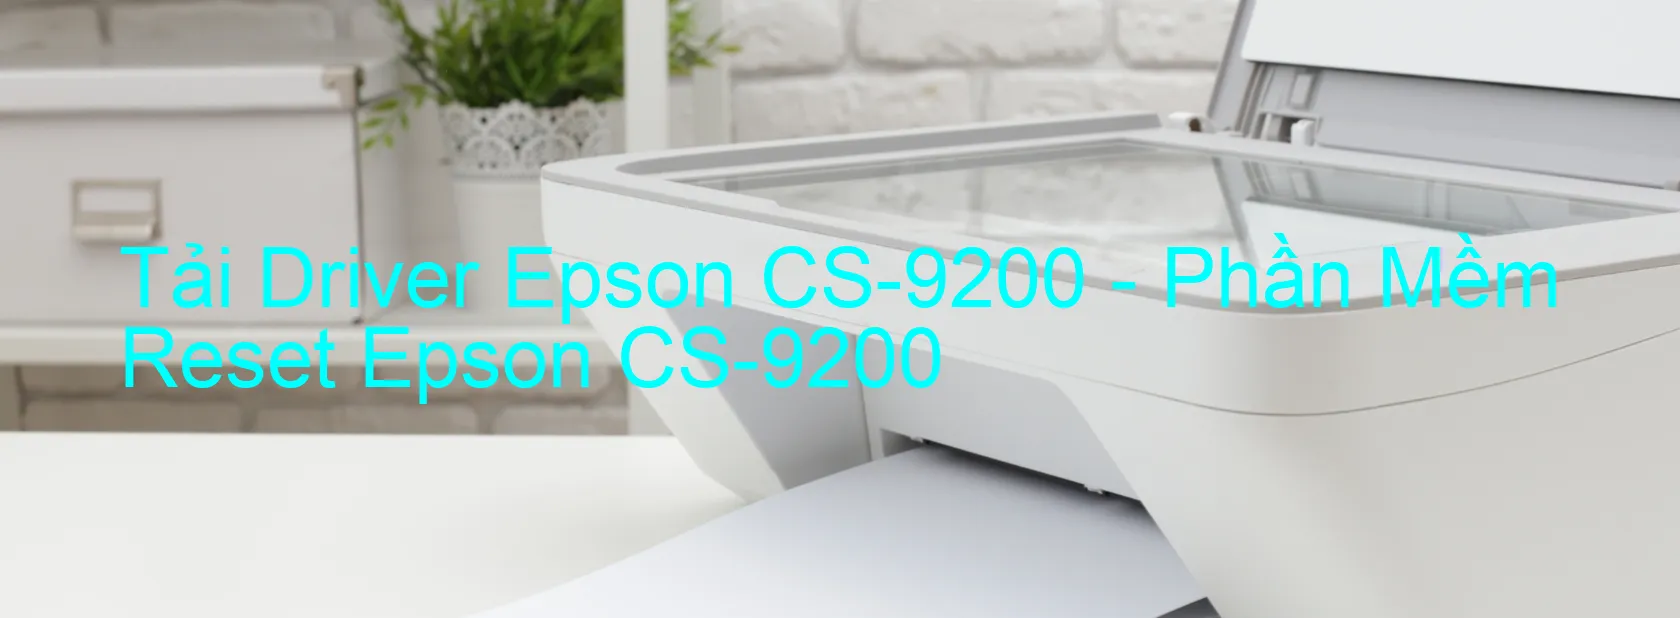 Driver Epson CS-9200, Phần Mềm Reset Epson CS-9200